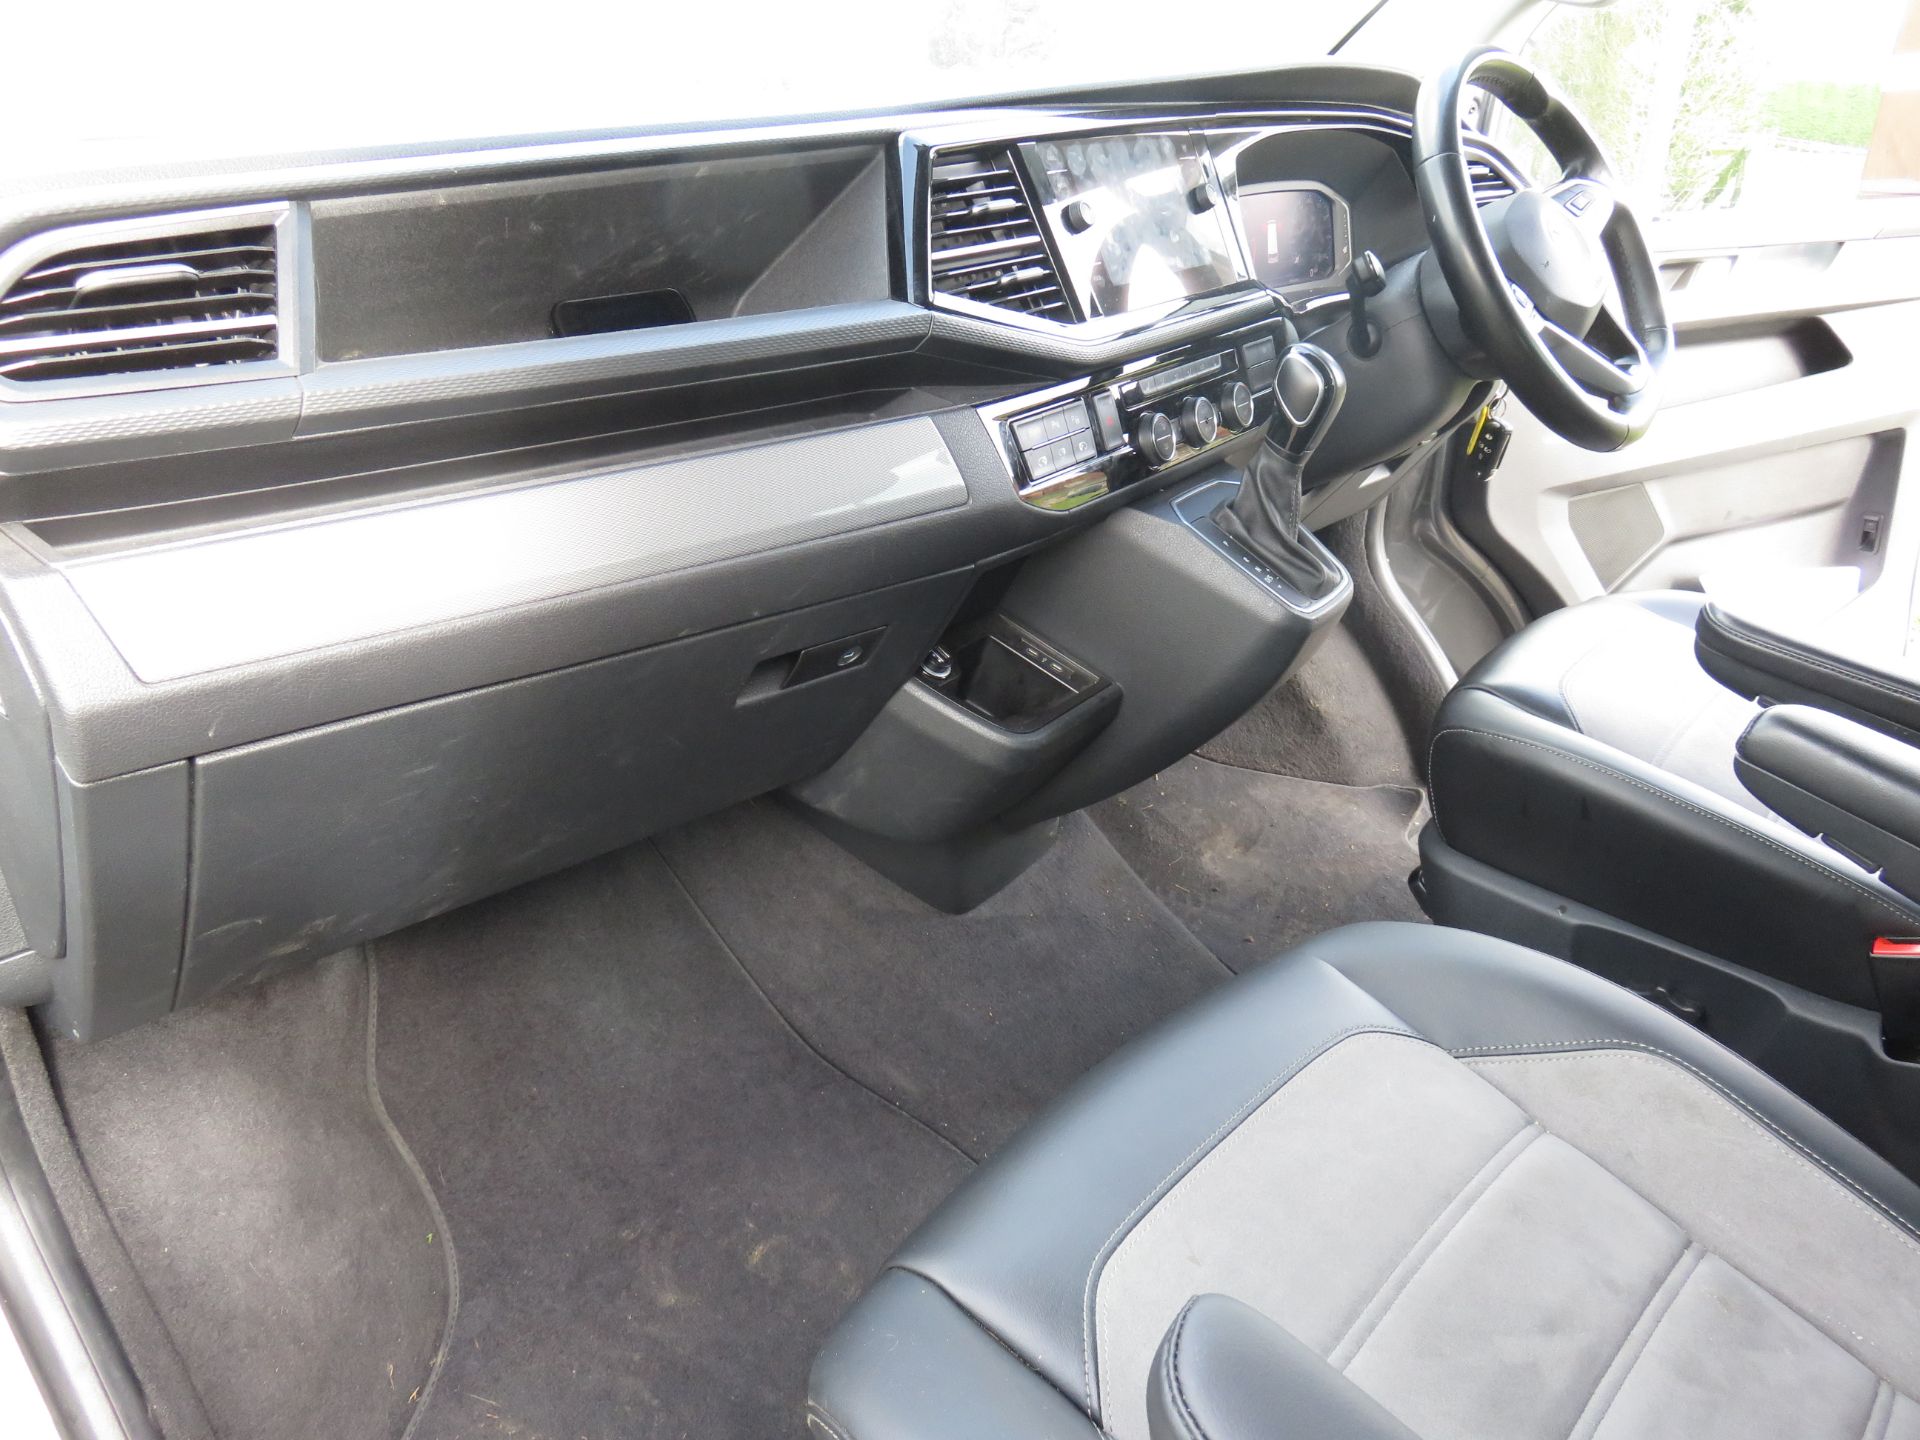 1 Volkswagen Caravelle 2.0 TDI (150PS) Executive BMT SNB DSG 7 Seat Five Door MPV - Image 16 of 17